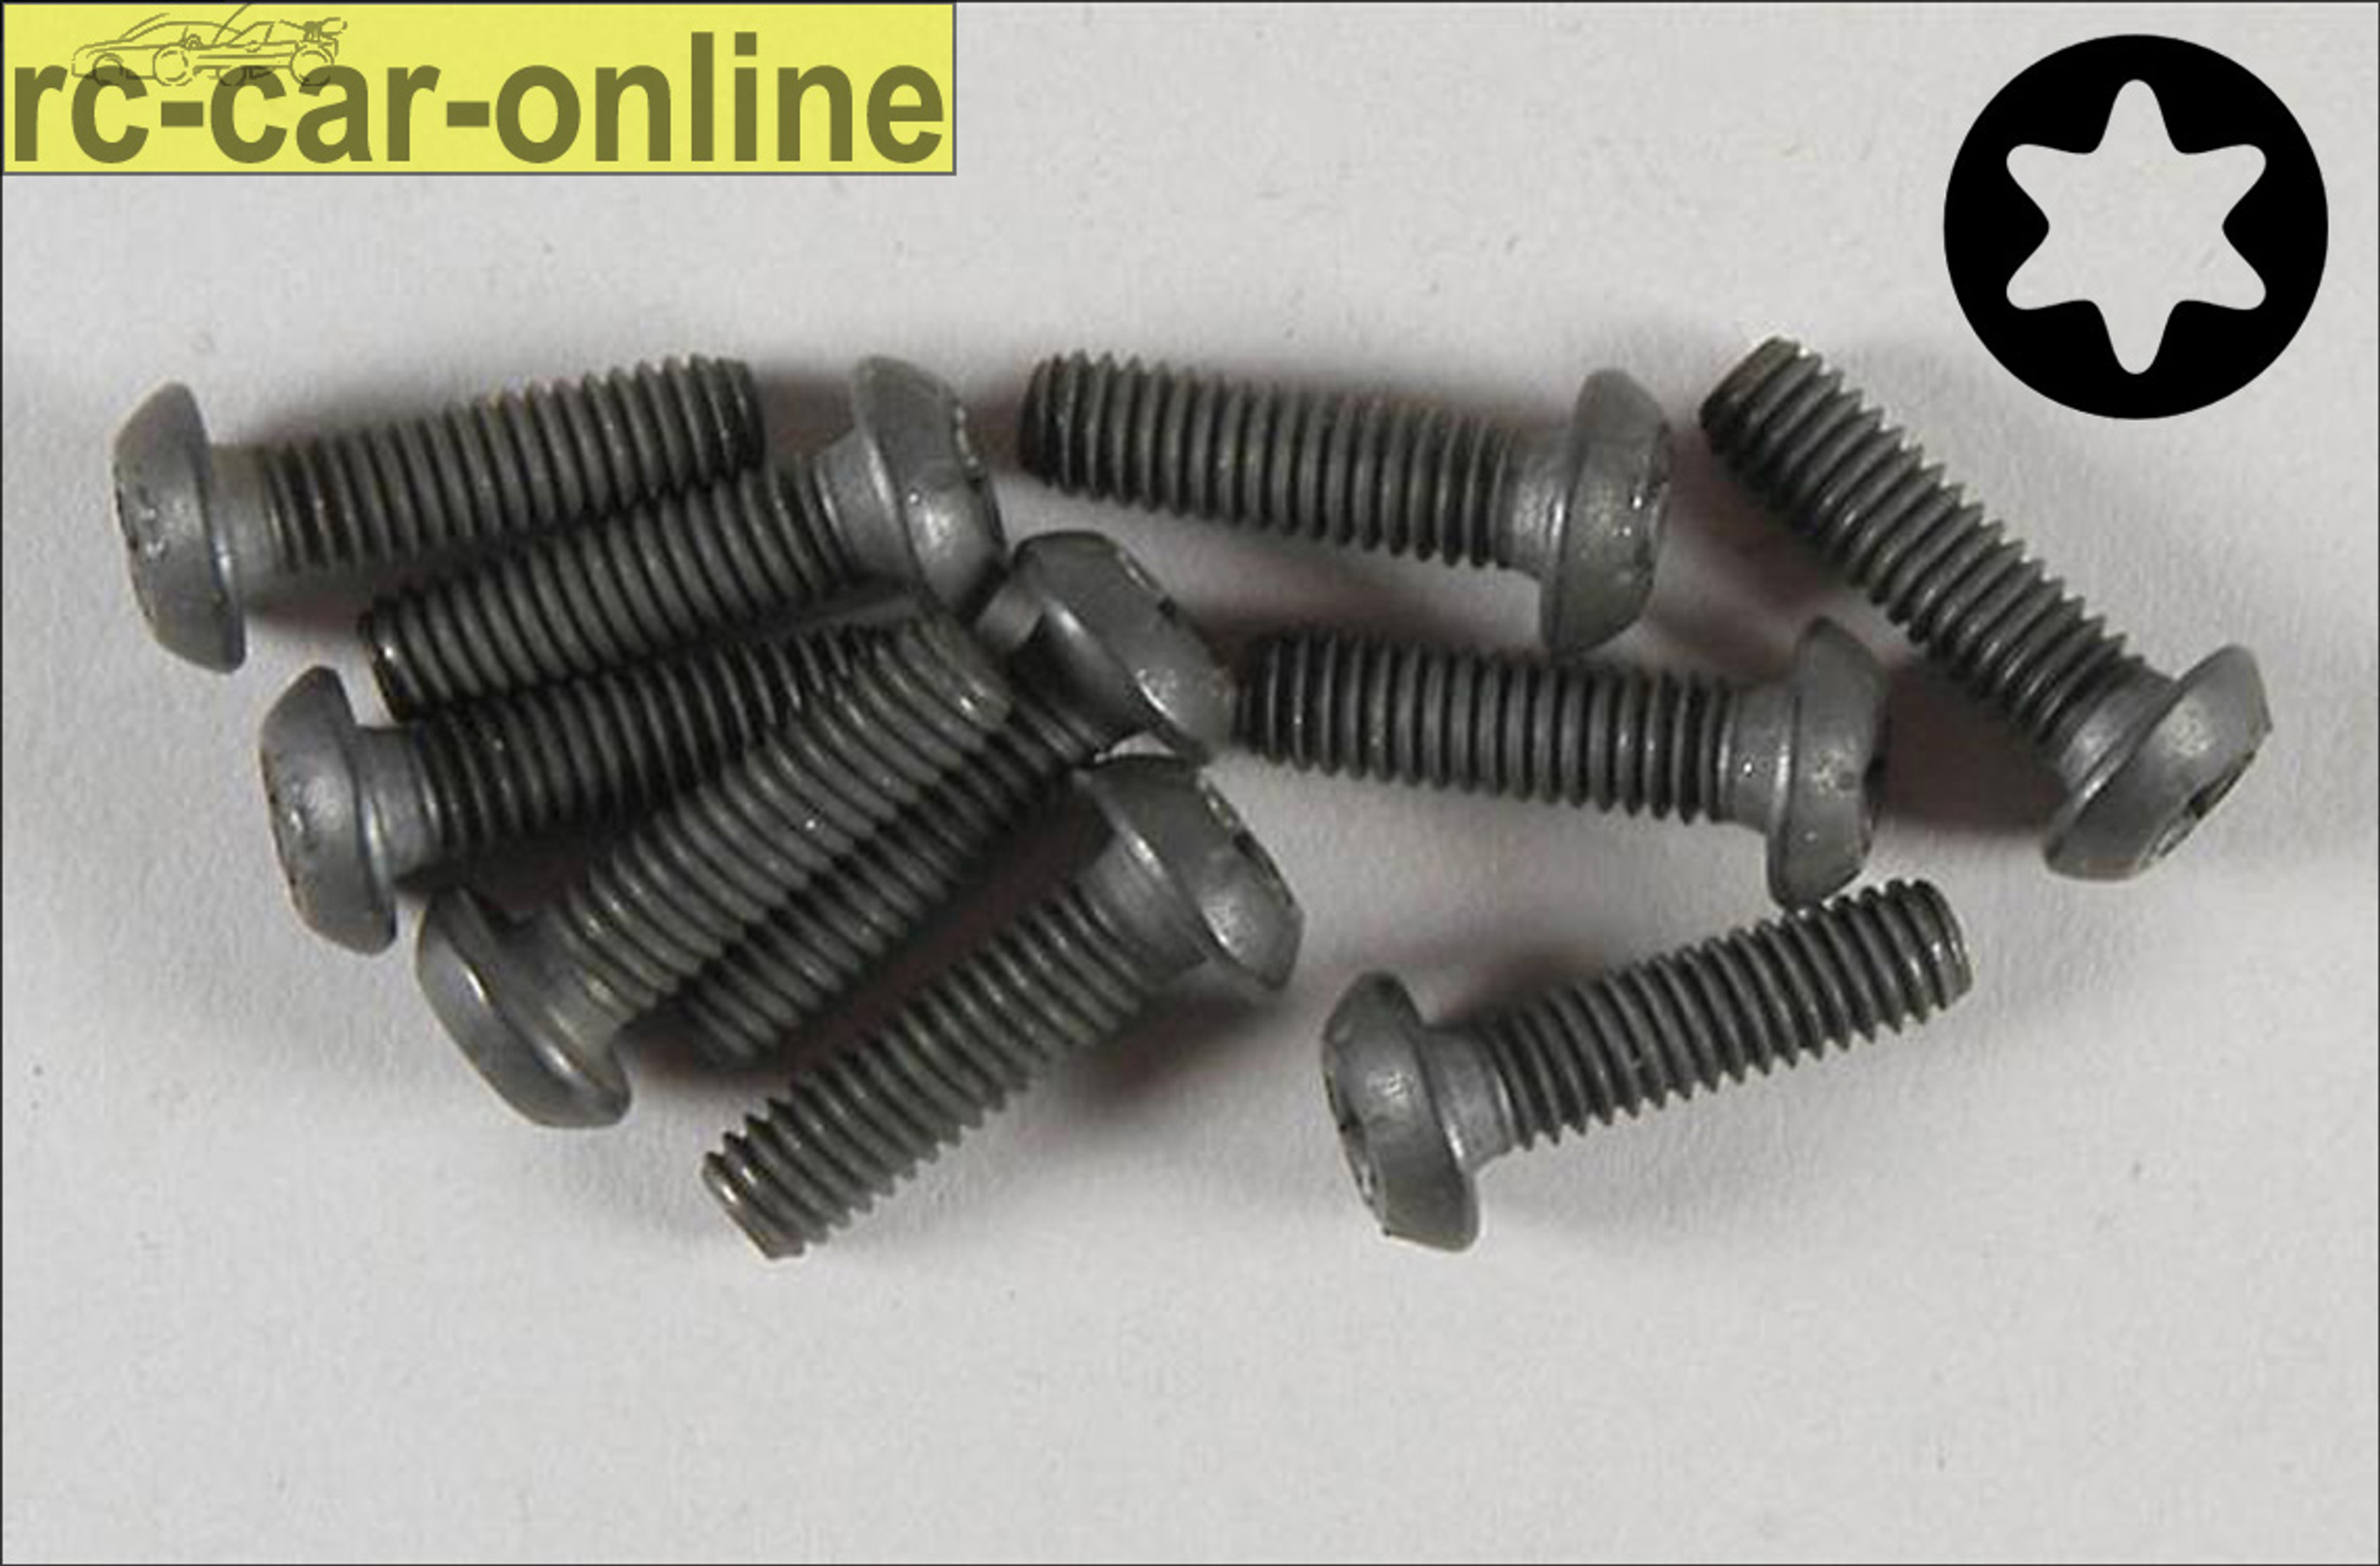 6925/12 FG Pan-head screw with Torx M4x12 mm, 10 pieces